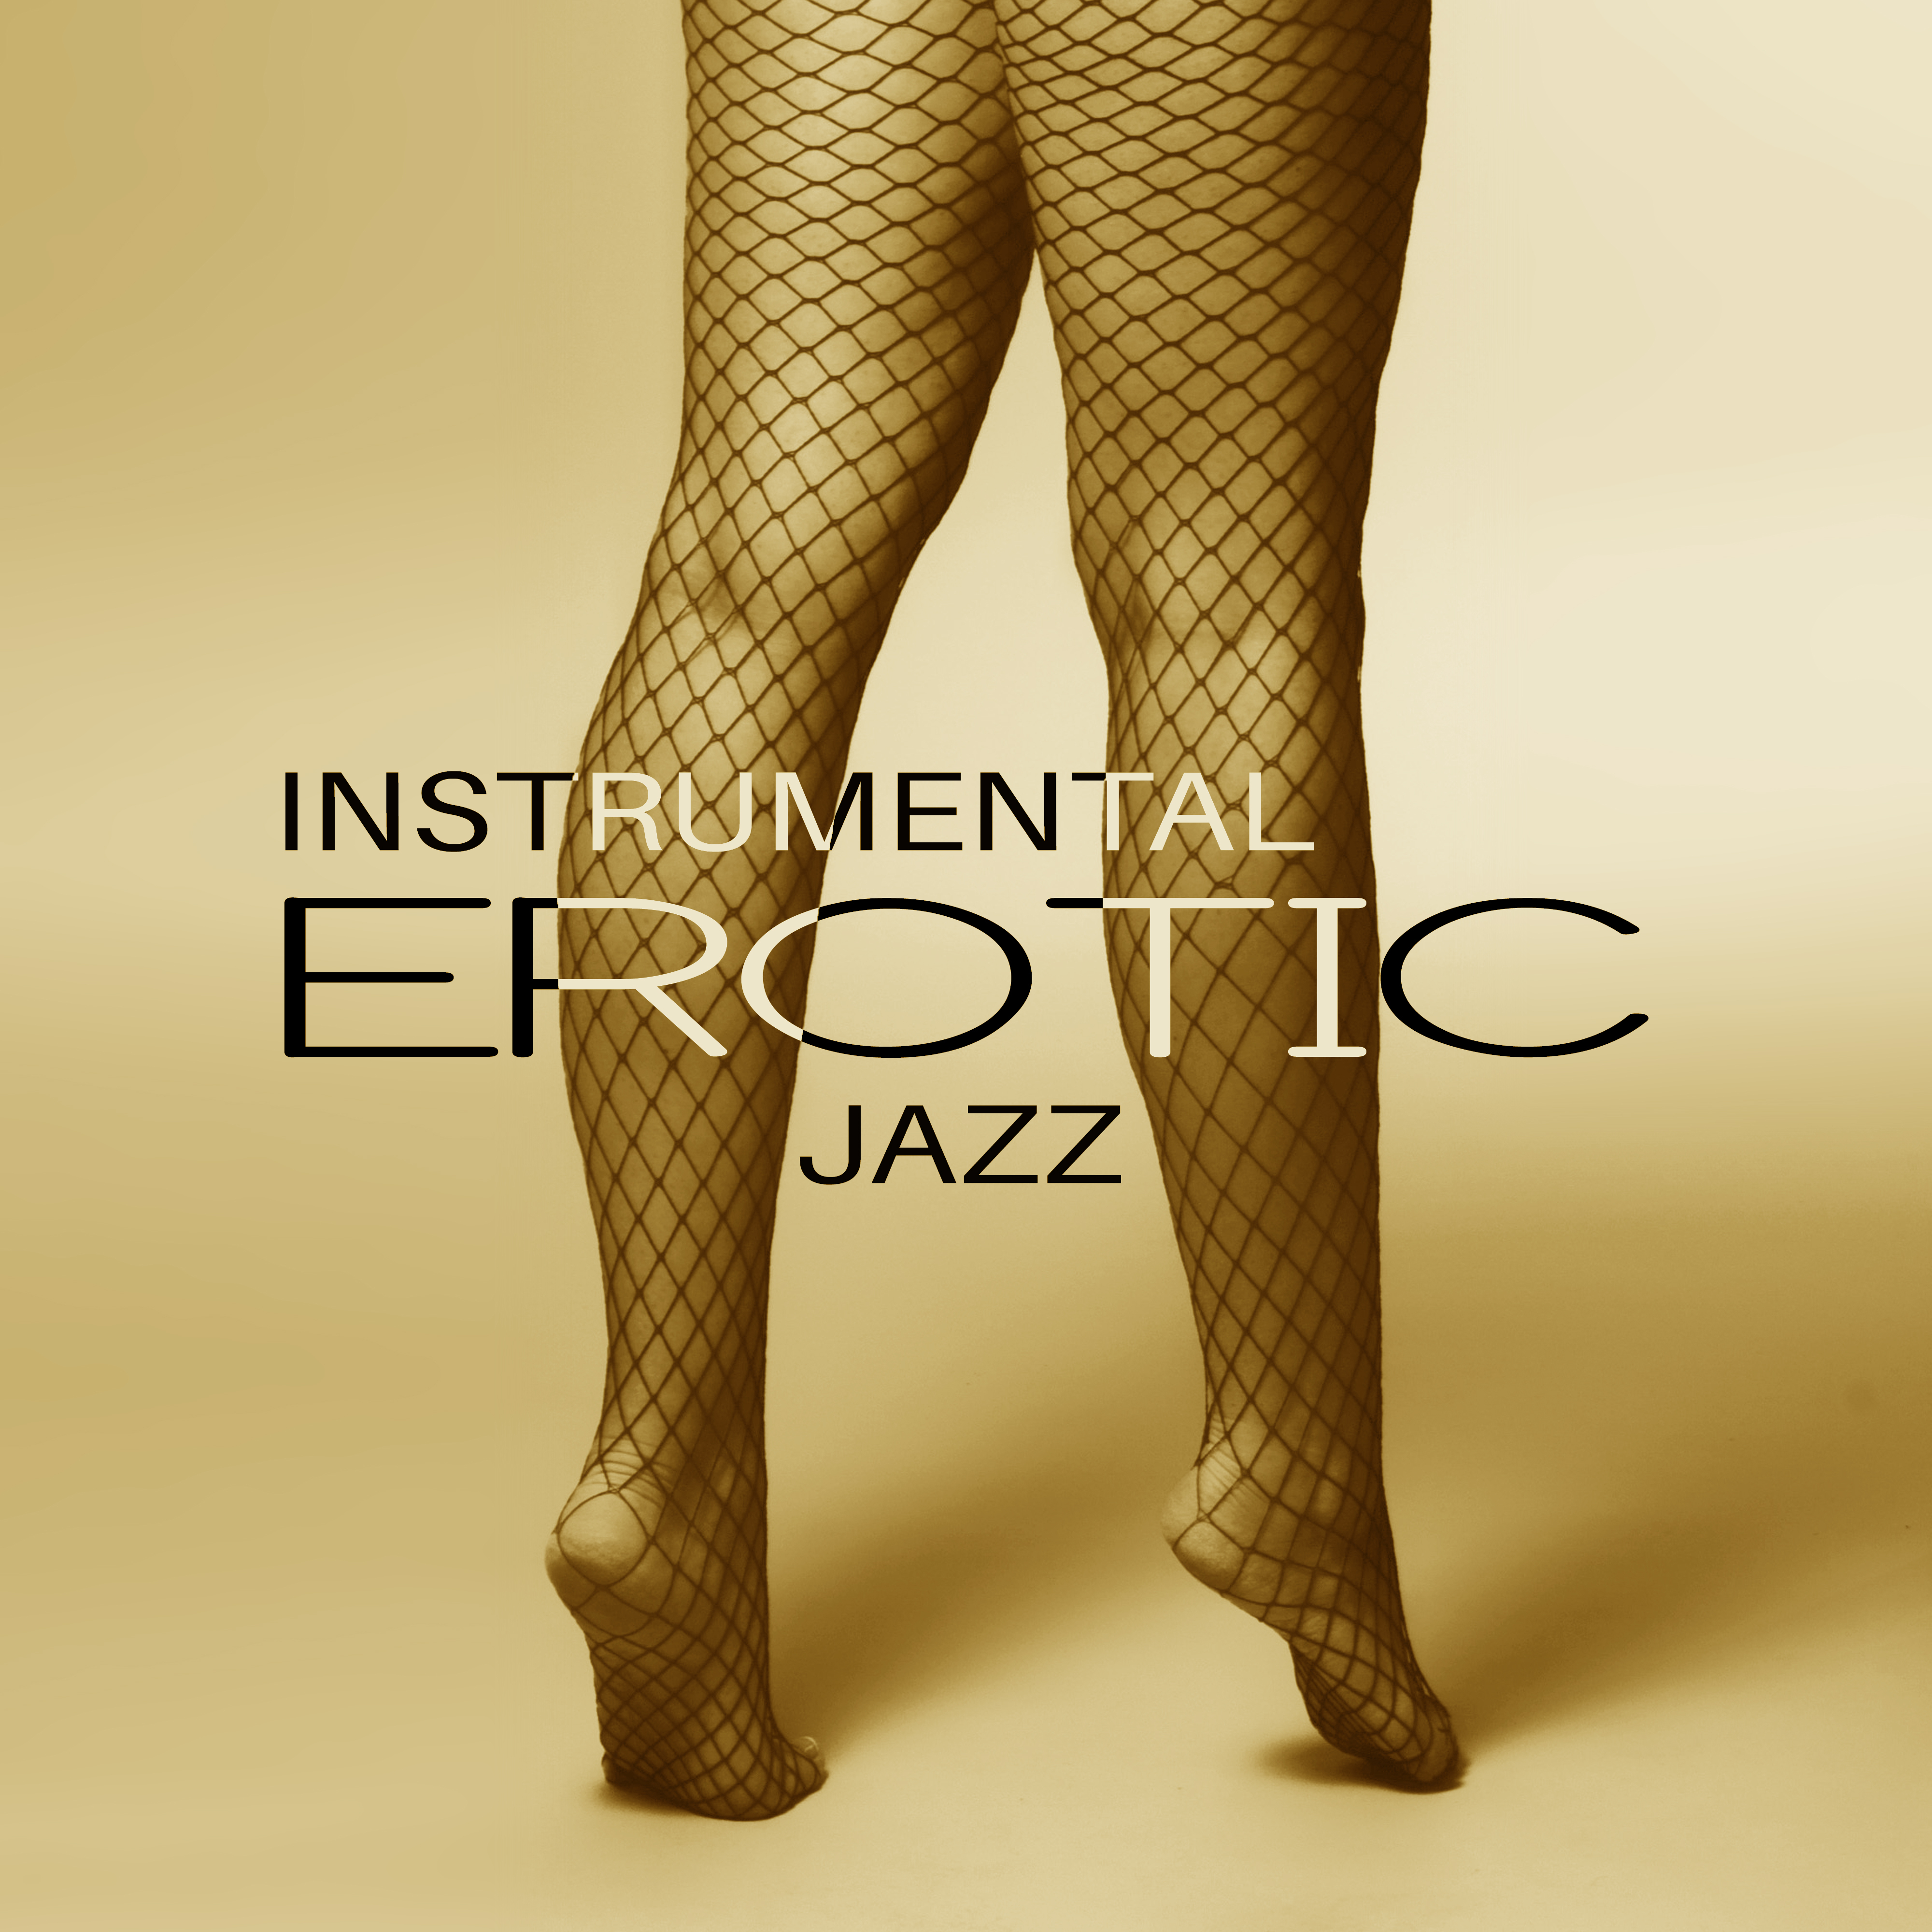 Instrumental Erotic Jazz  Night Lovers, Erotic Jazz Music, Shades of Jazz, Moonlight Sounds